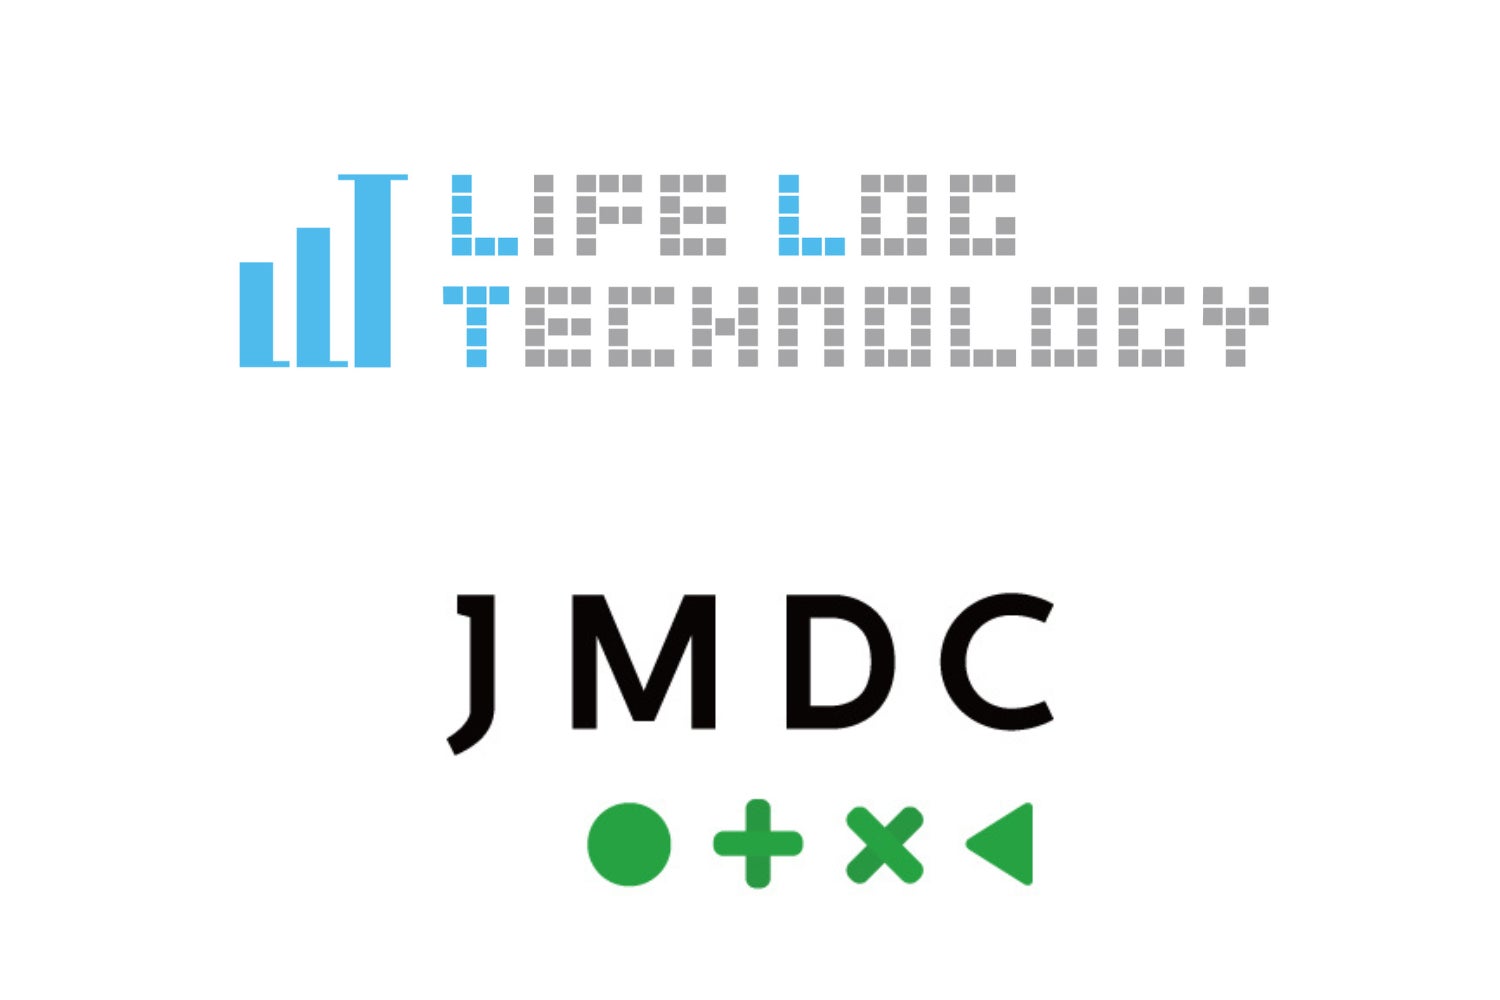 JMDCとライフログテクノロジー、
食事データを含めたライフログデータの活用に向けた
業務提携を締結